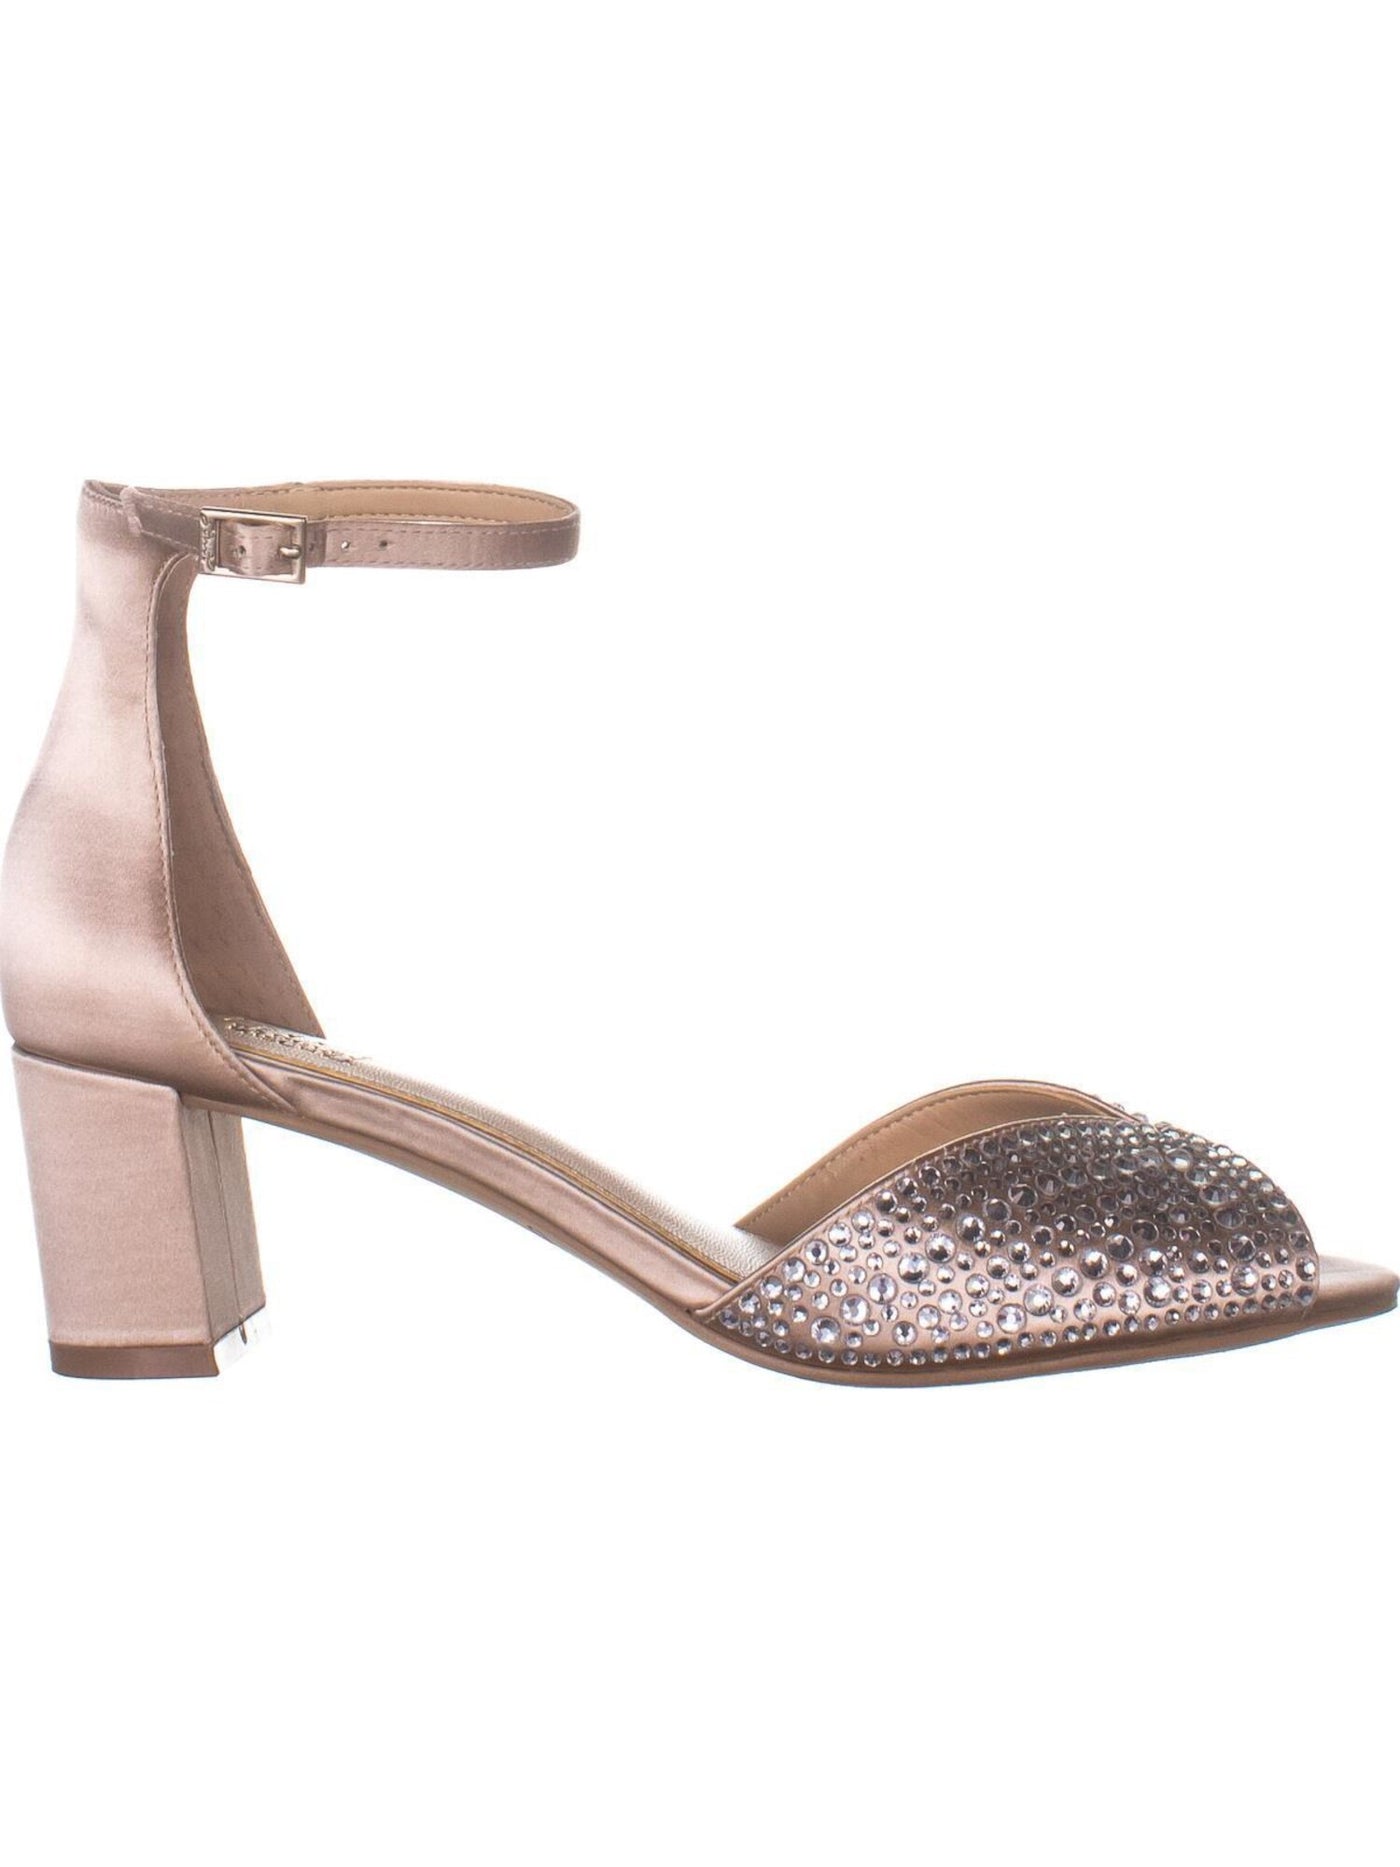 JEWEL BADGLEY MISCHKA Womens Pink Rhinestone Ankle Strap Sycamore Round Toe Block Heel Buckle Dress Sandals Shoes 9 M